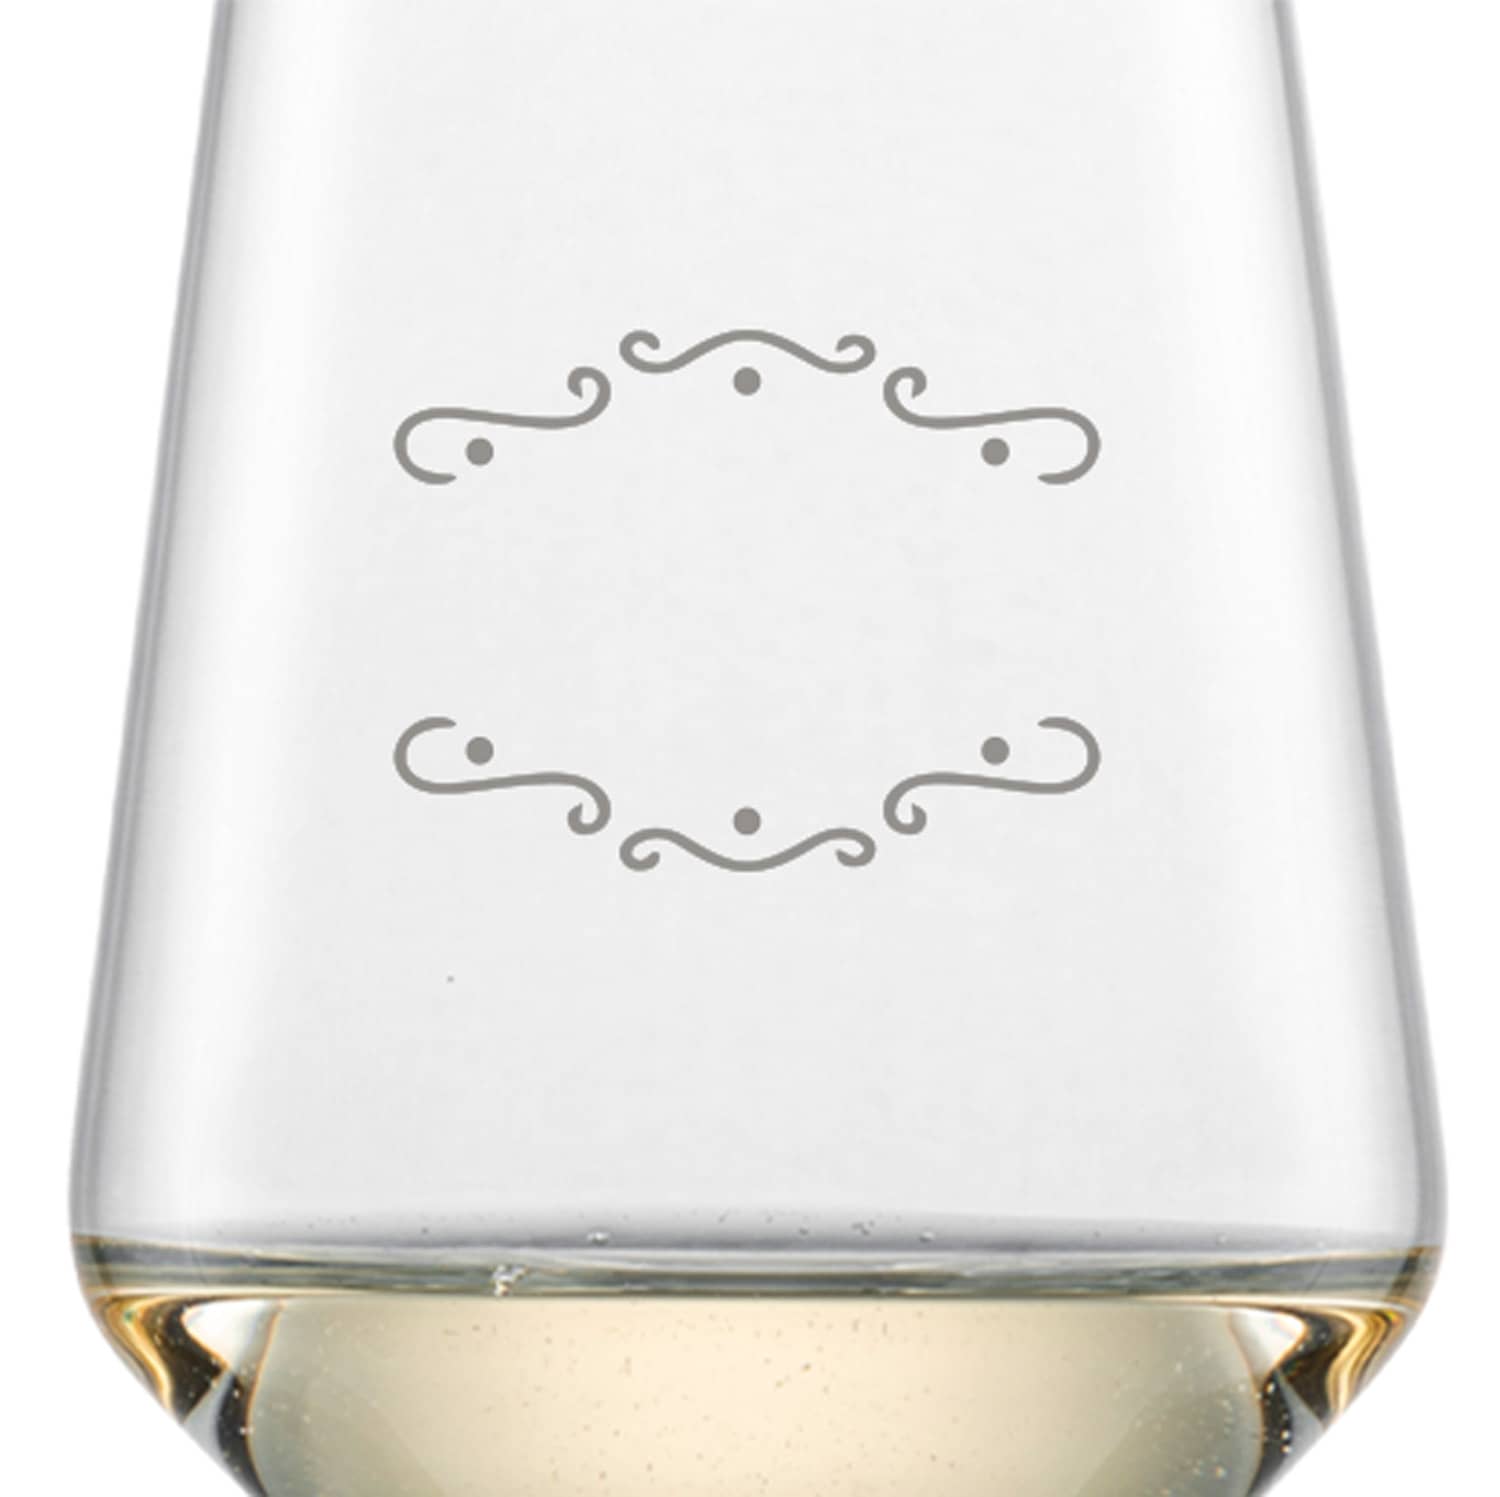 Schott Zwiesel Riesling Weißweinglas PURE mit Namen oder Wunschtext graviert (Verzierung 02)